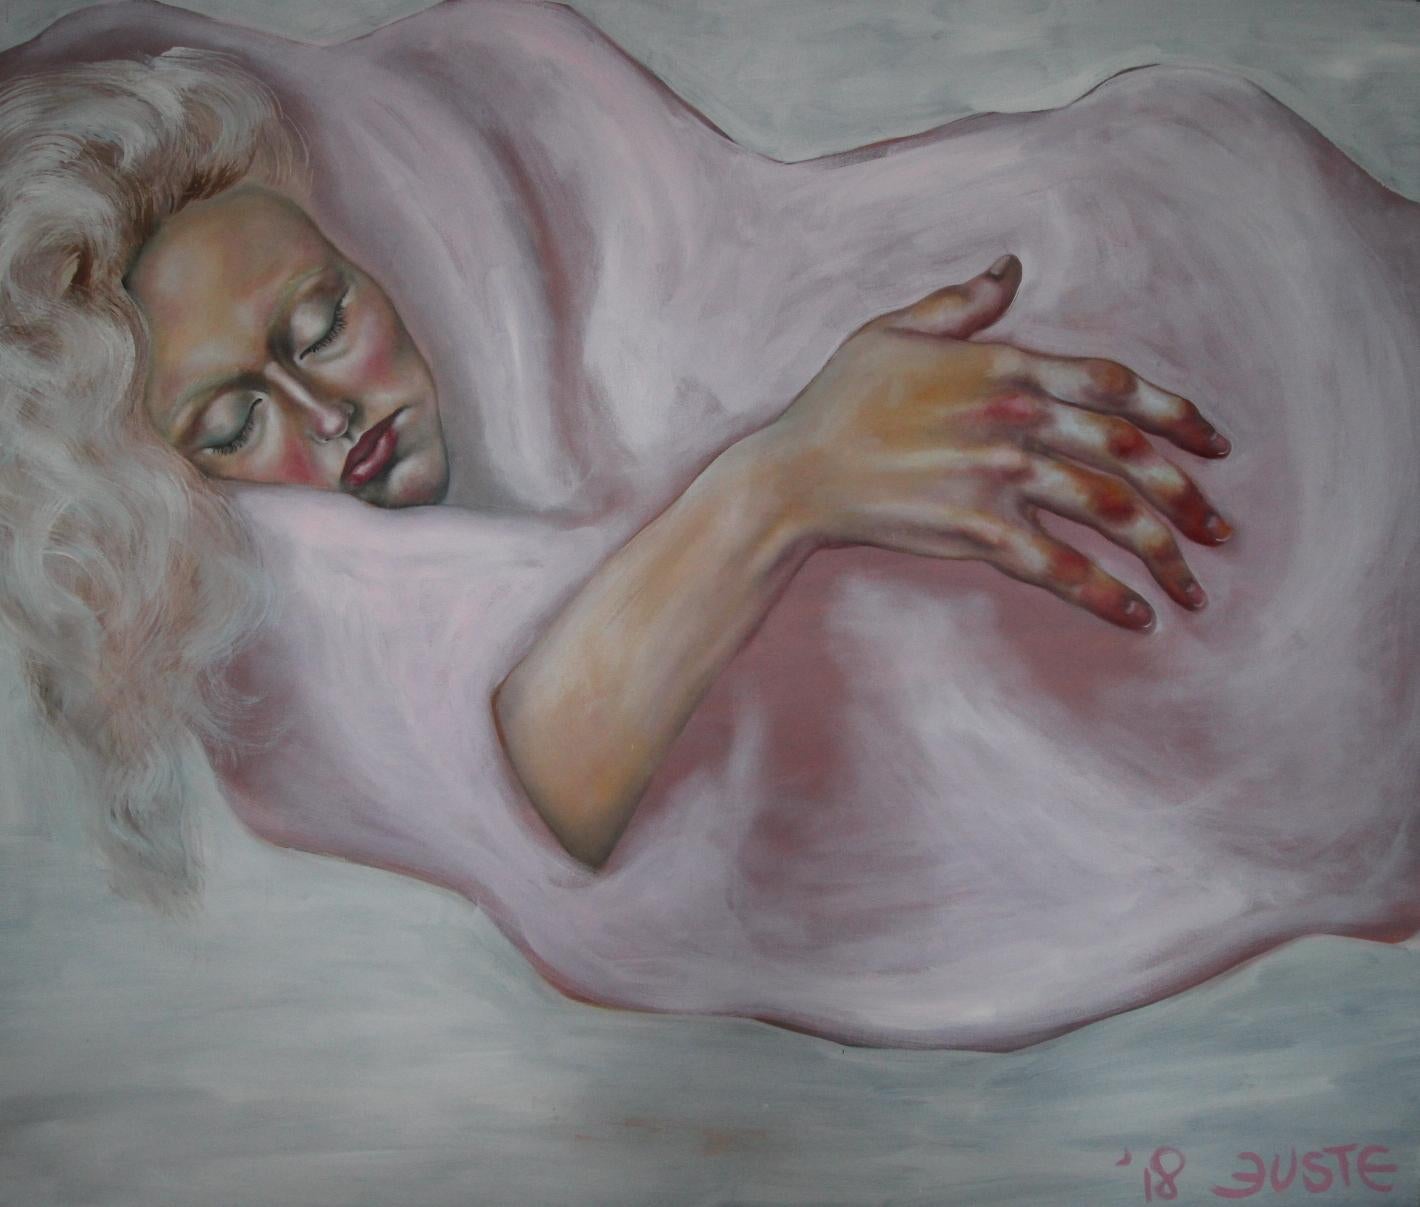 Dreamer #2. 2018. Oil on canvas, 110x130 cm - Mixed Media Art by Justine Seile-Urtane